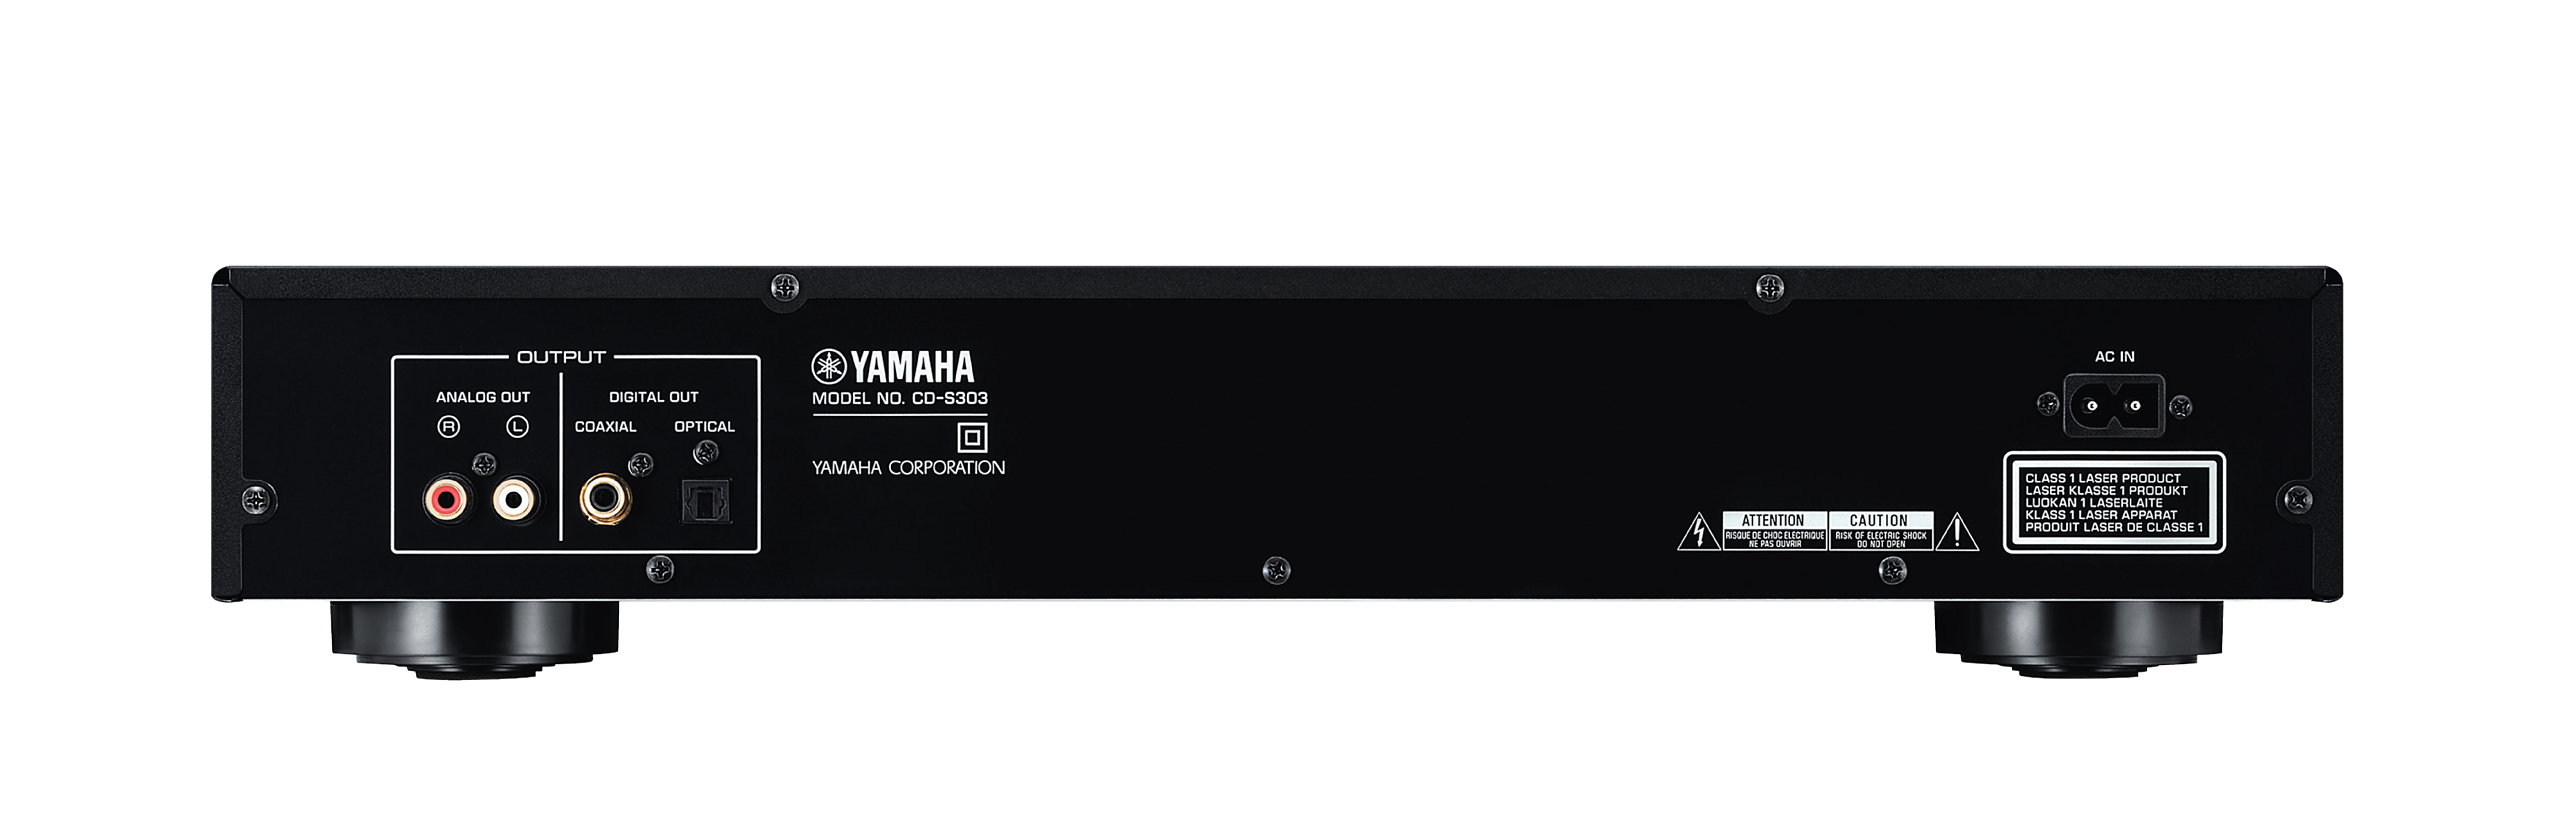 Yamaha cd player CDS303BL